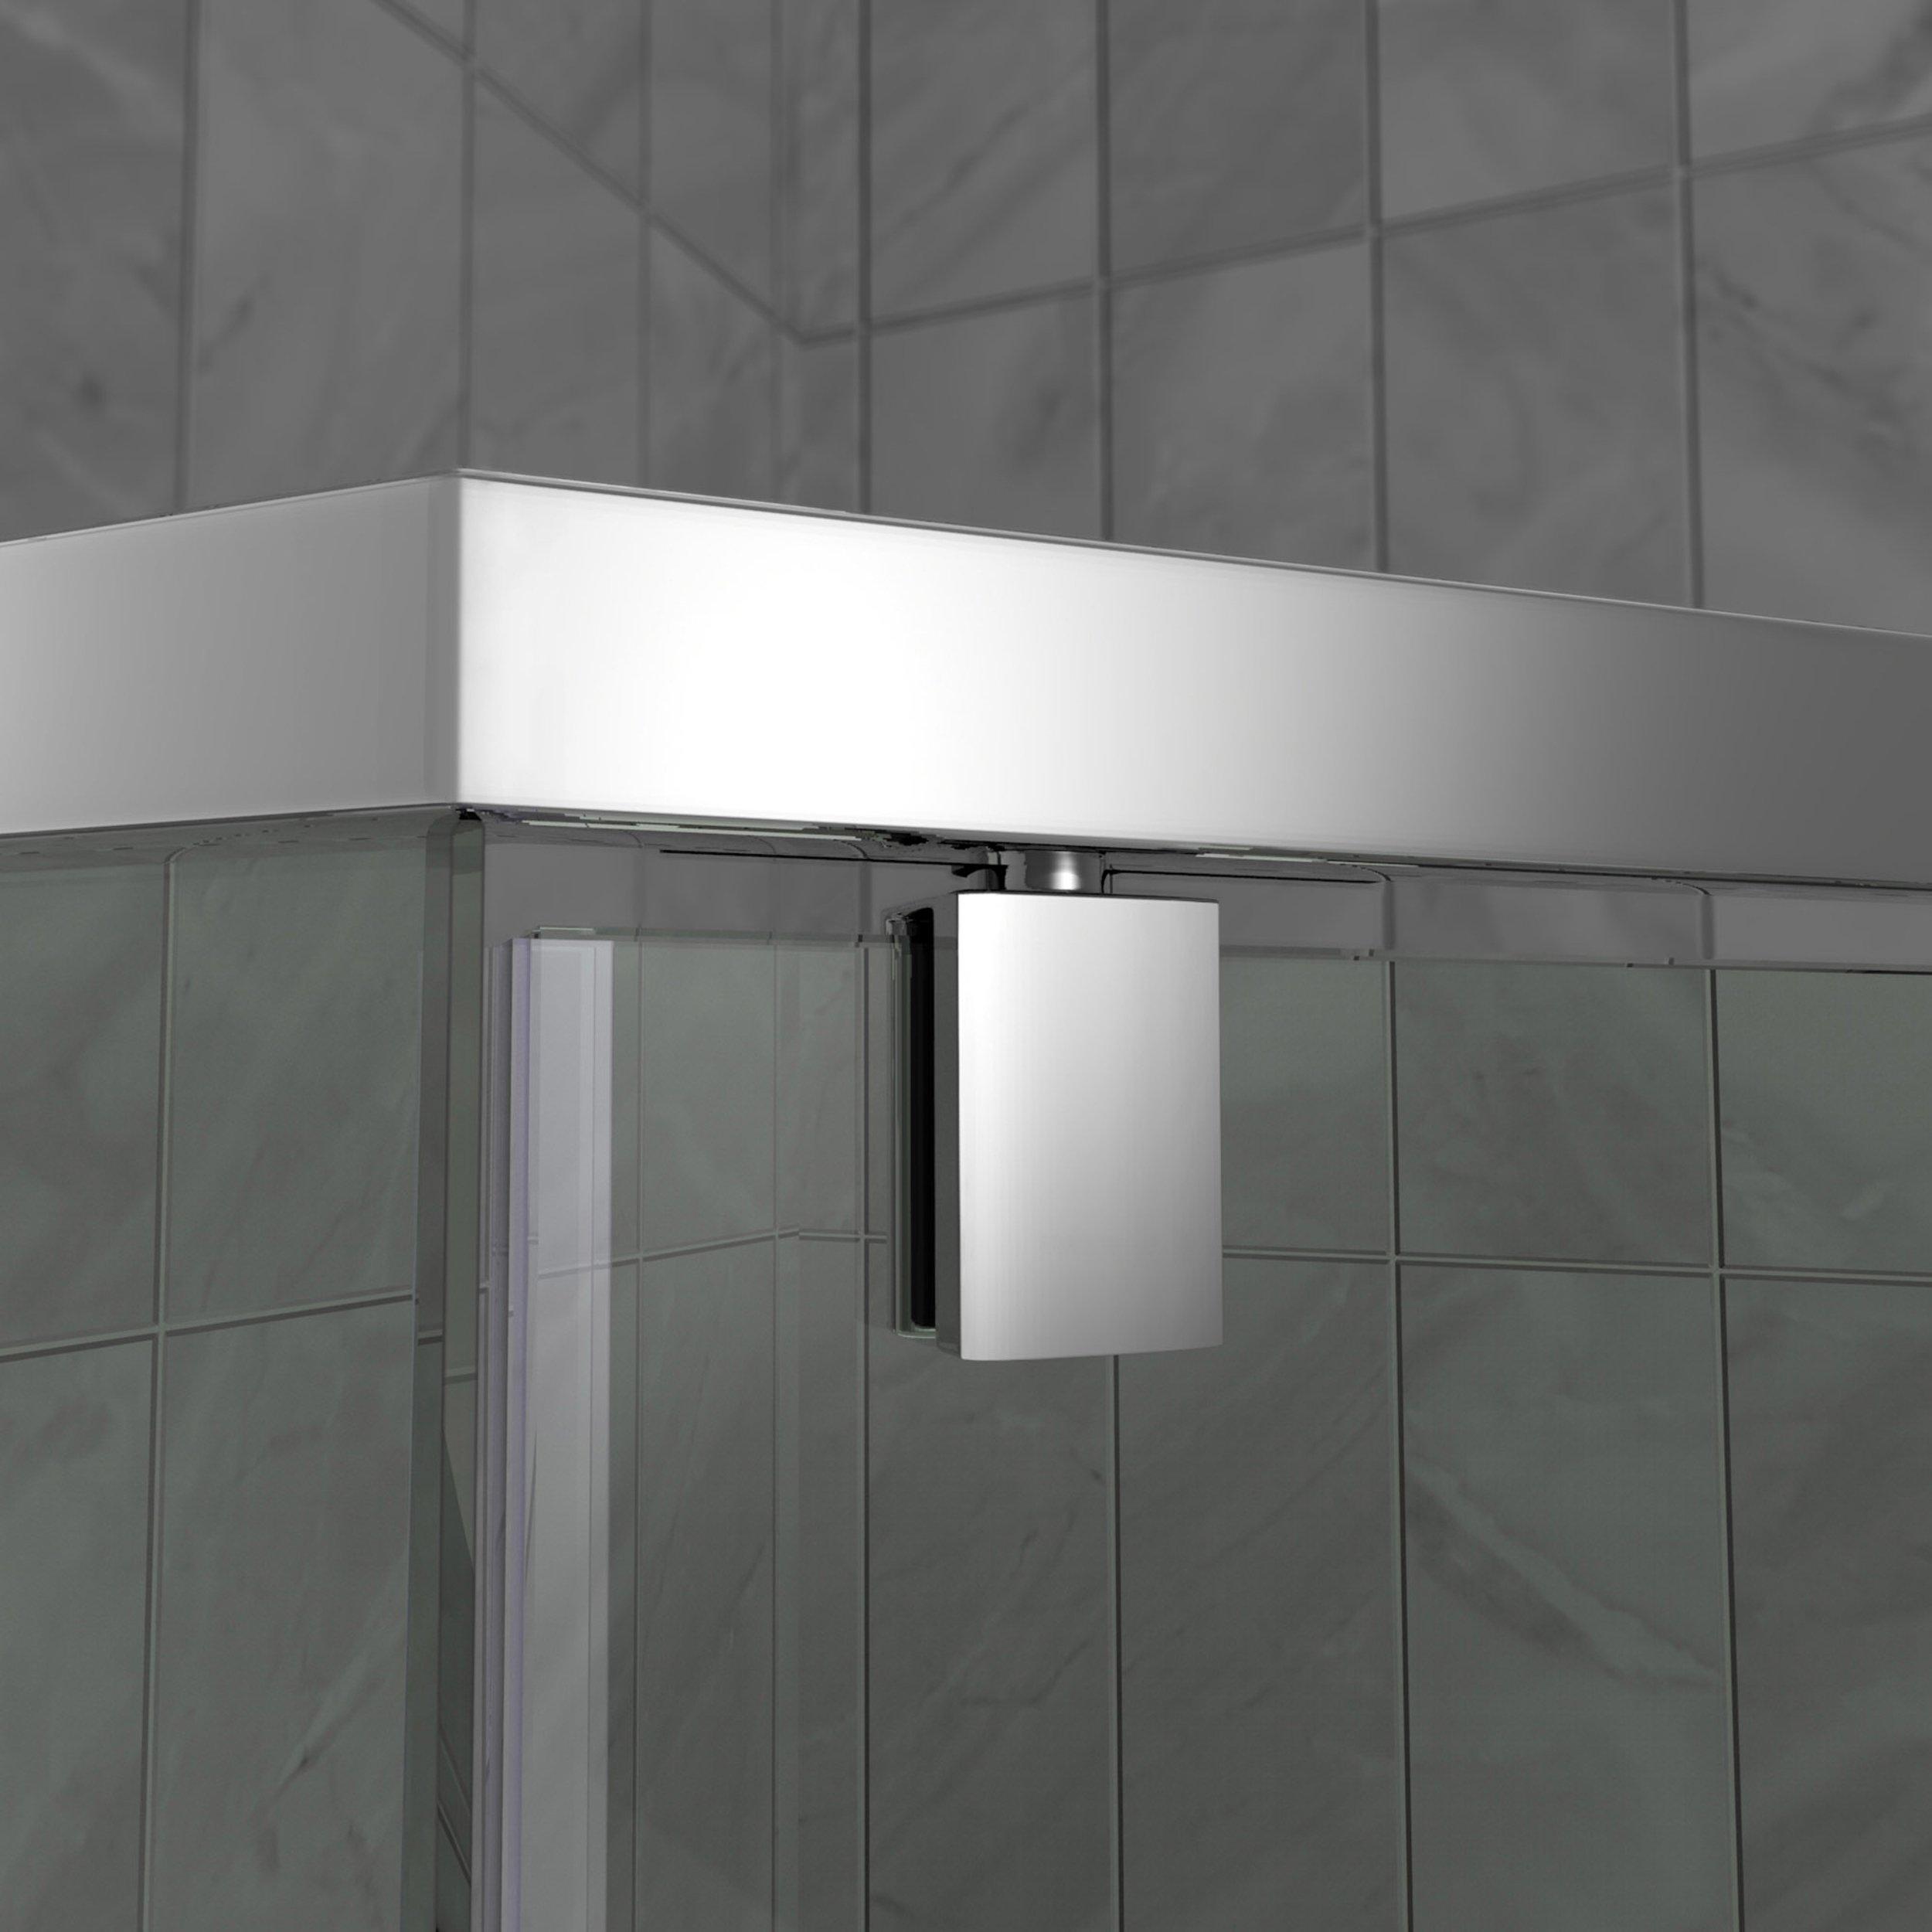 Prism Brushed Nickel Enclosure Shower Door